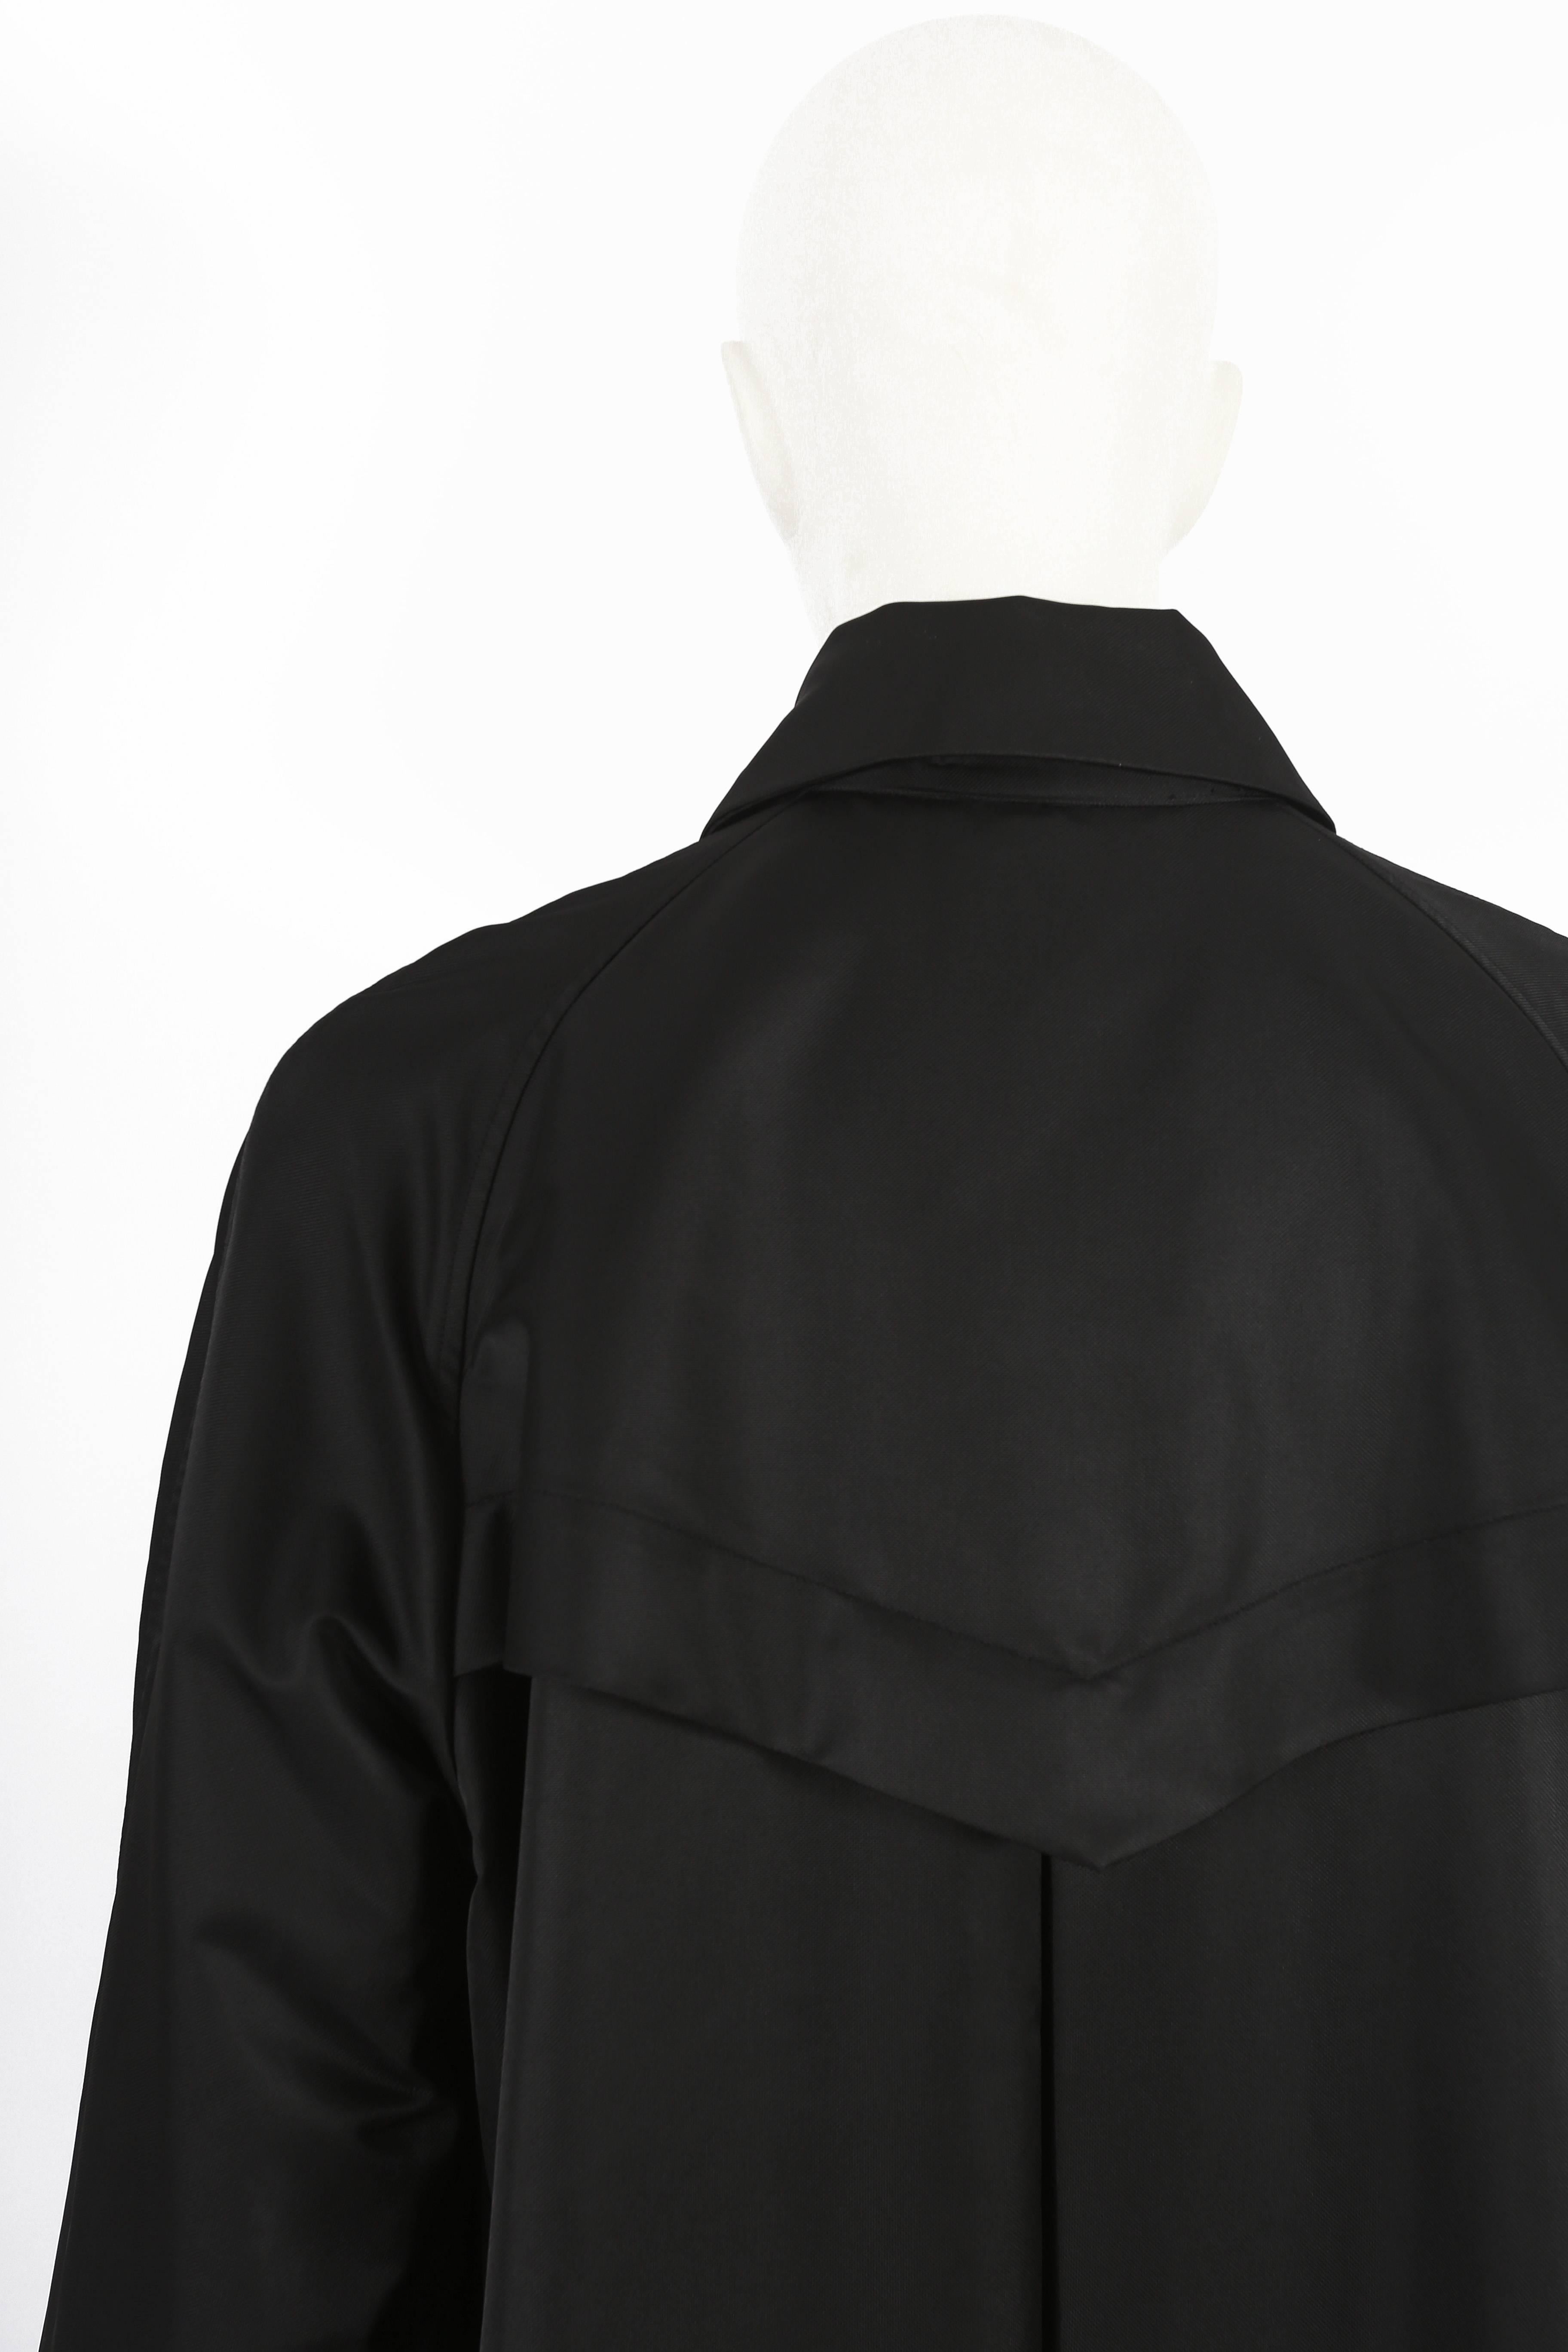 Issey Miyake Mens oversized black nylon coat, c. 1990s For Sale 3